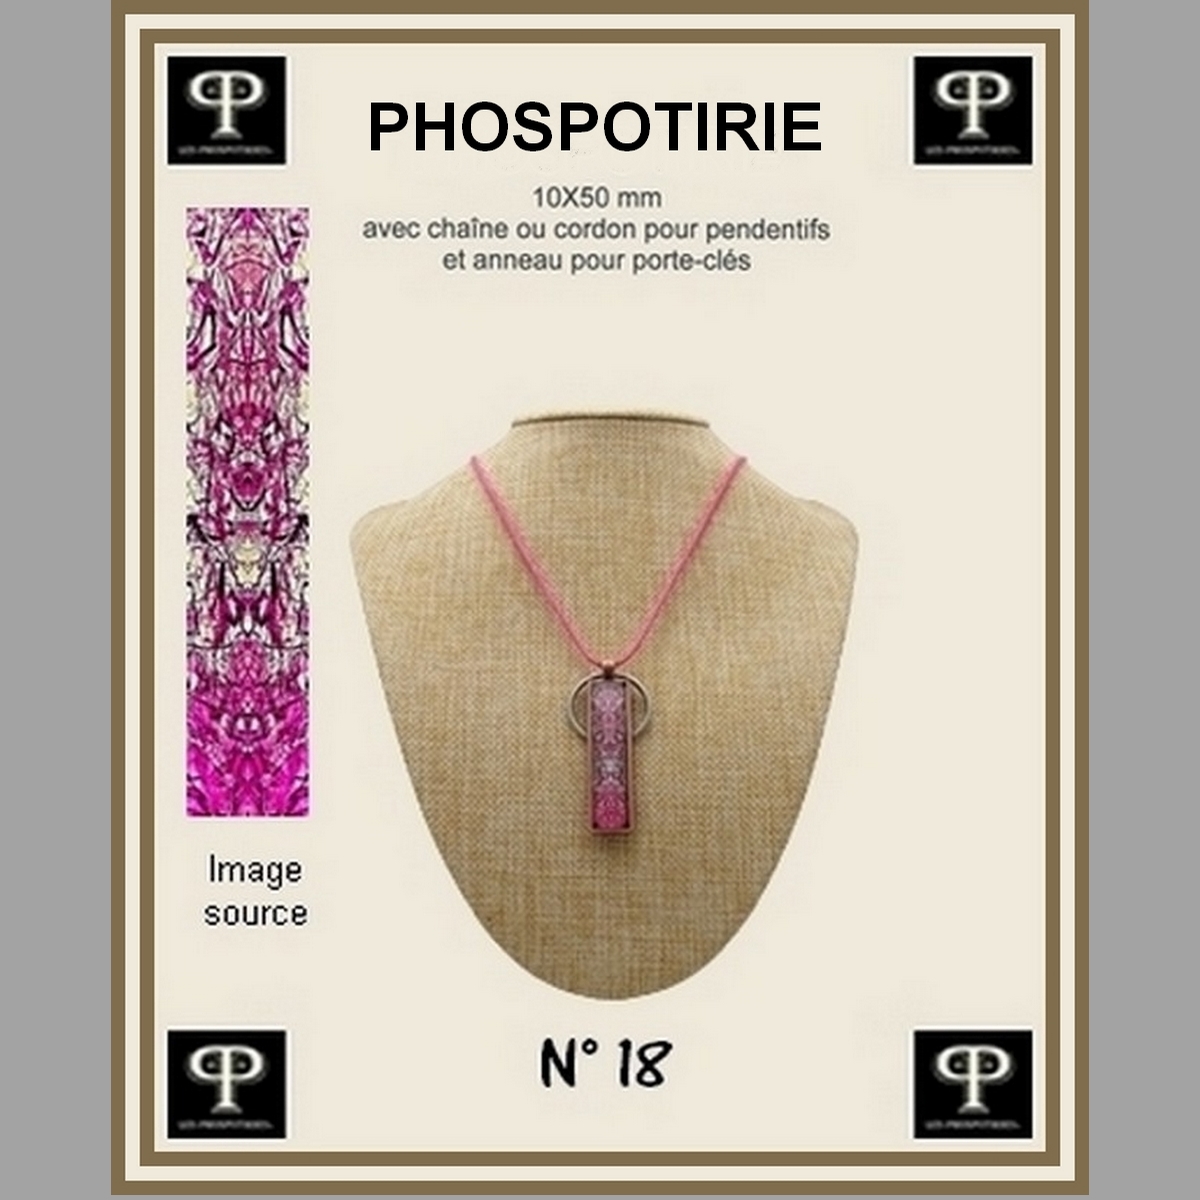 Phospotirie version TOTEM 10X50 mm N°18 pour pendentifs ou porte-clés